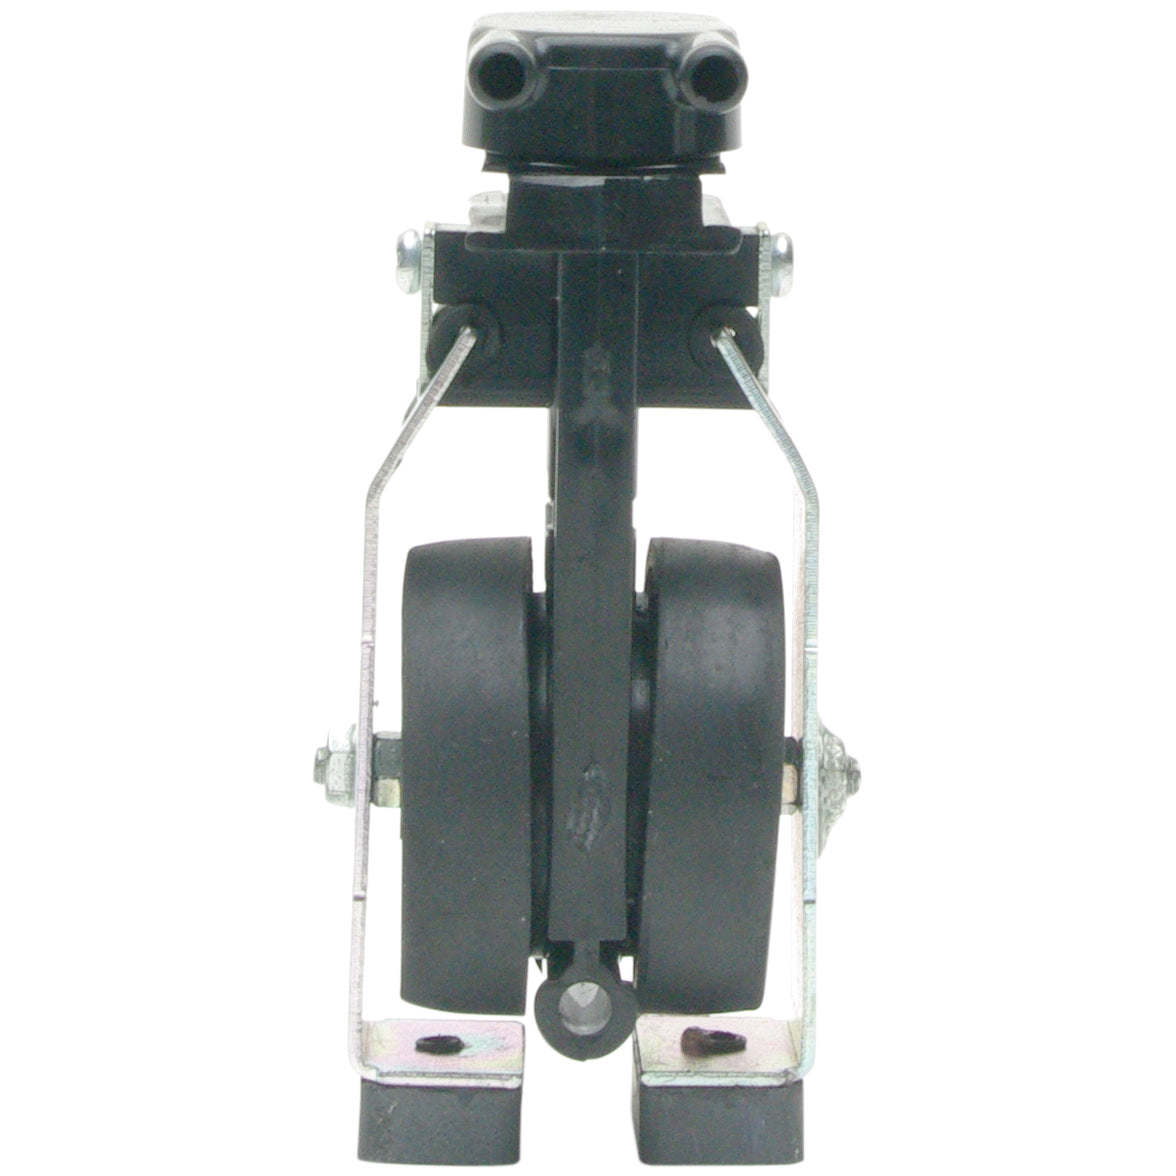 Fluval Q1, Q2 Air Pump Repair Module (Special Order Product)